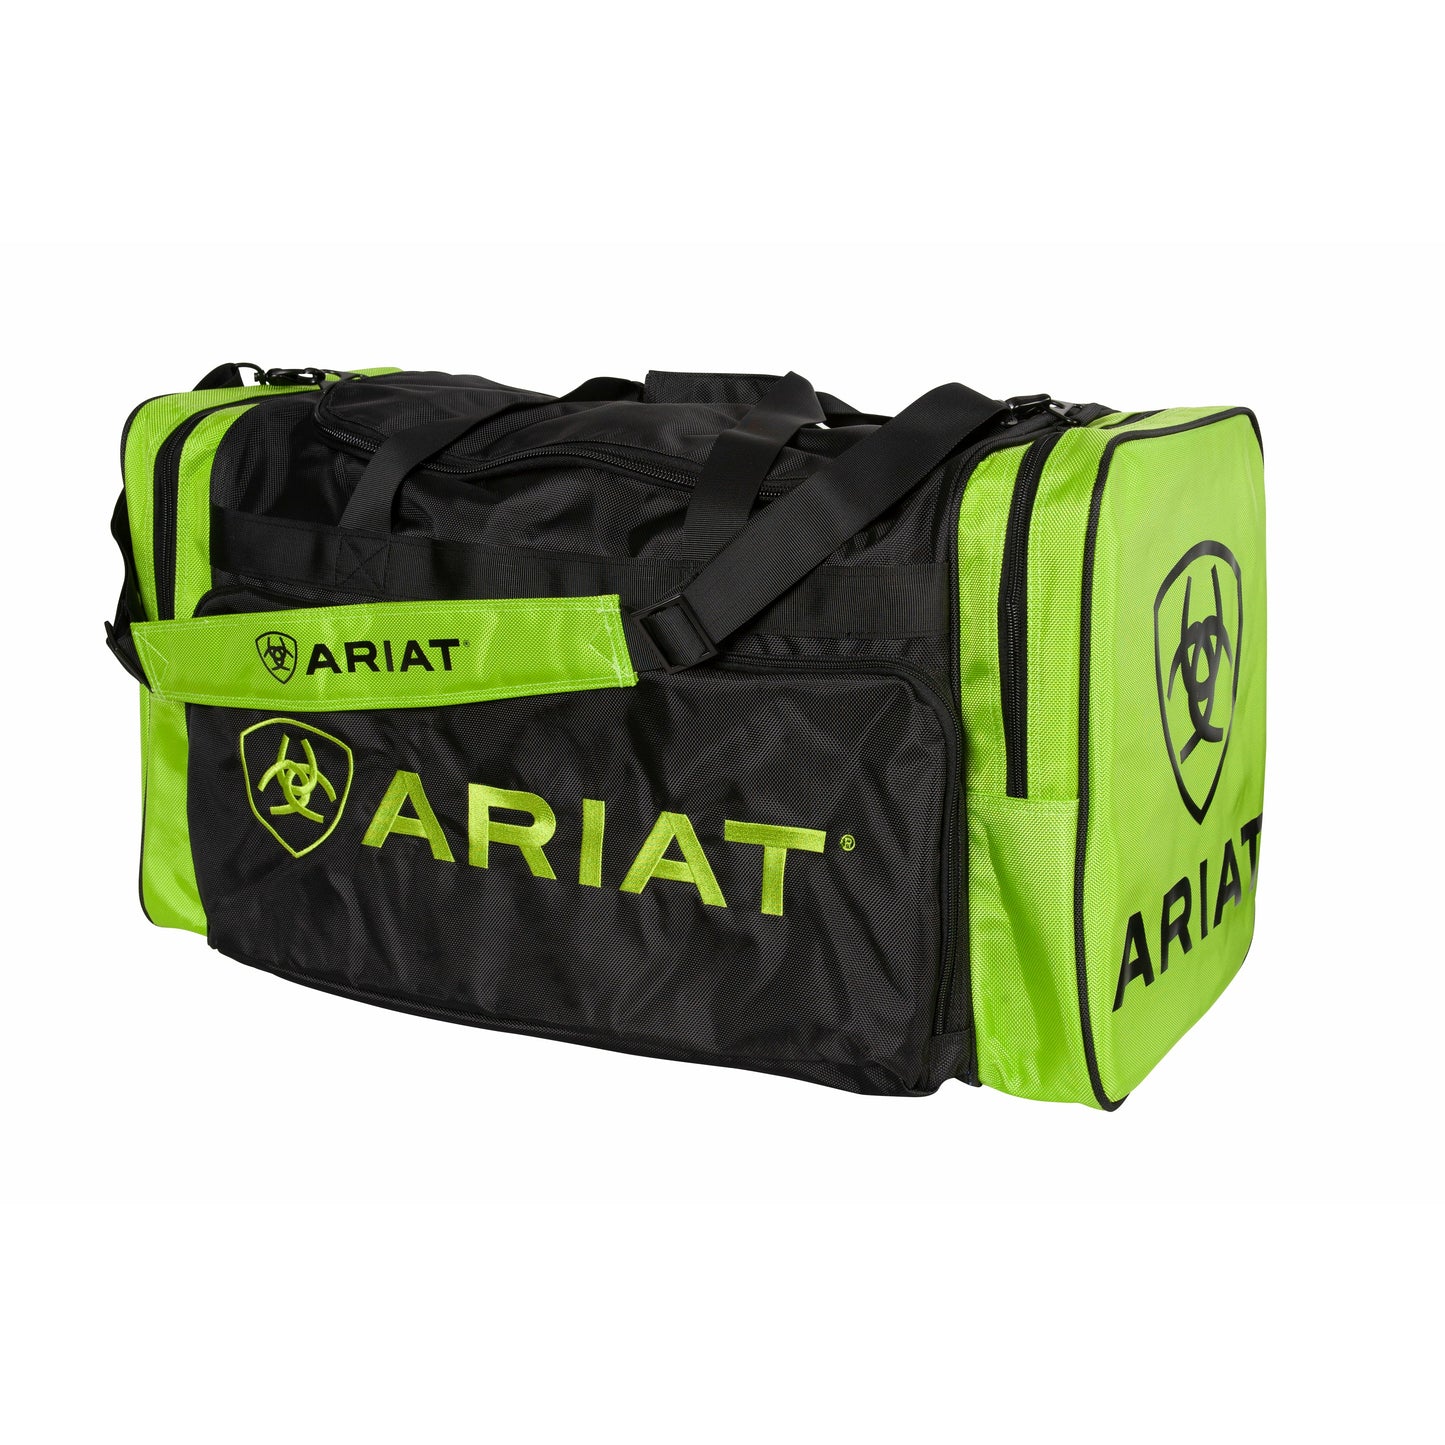 Ariat Gear Bag Green/Black